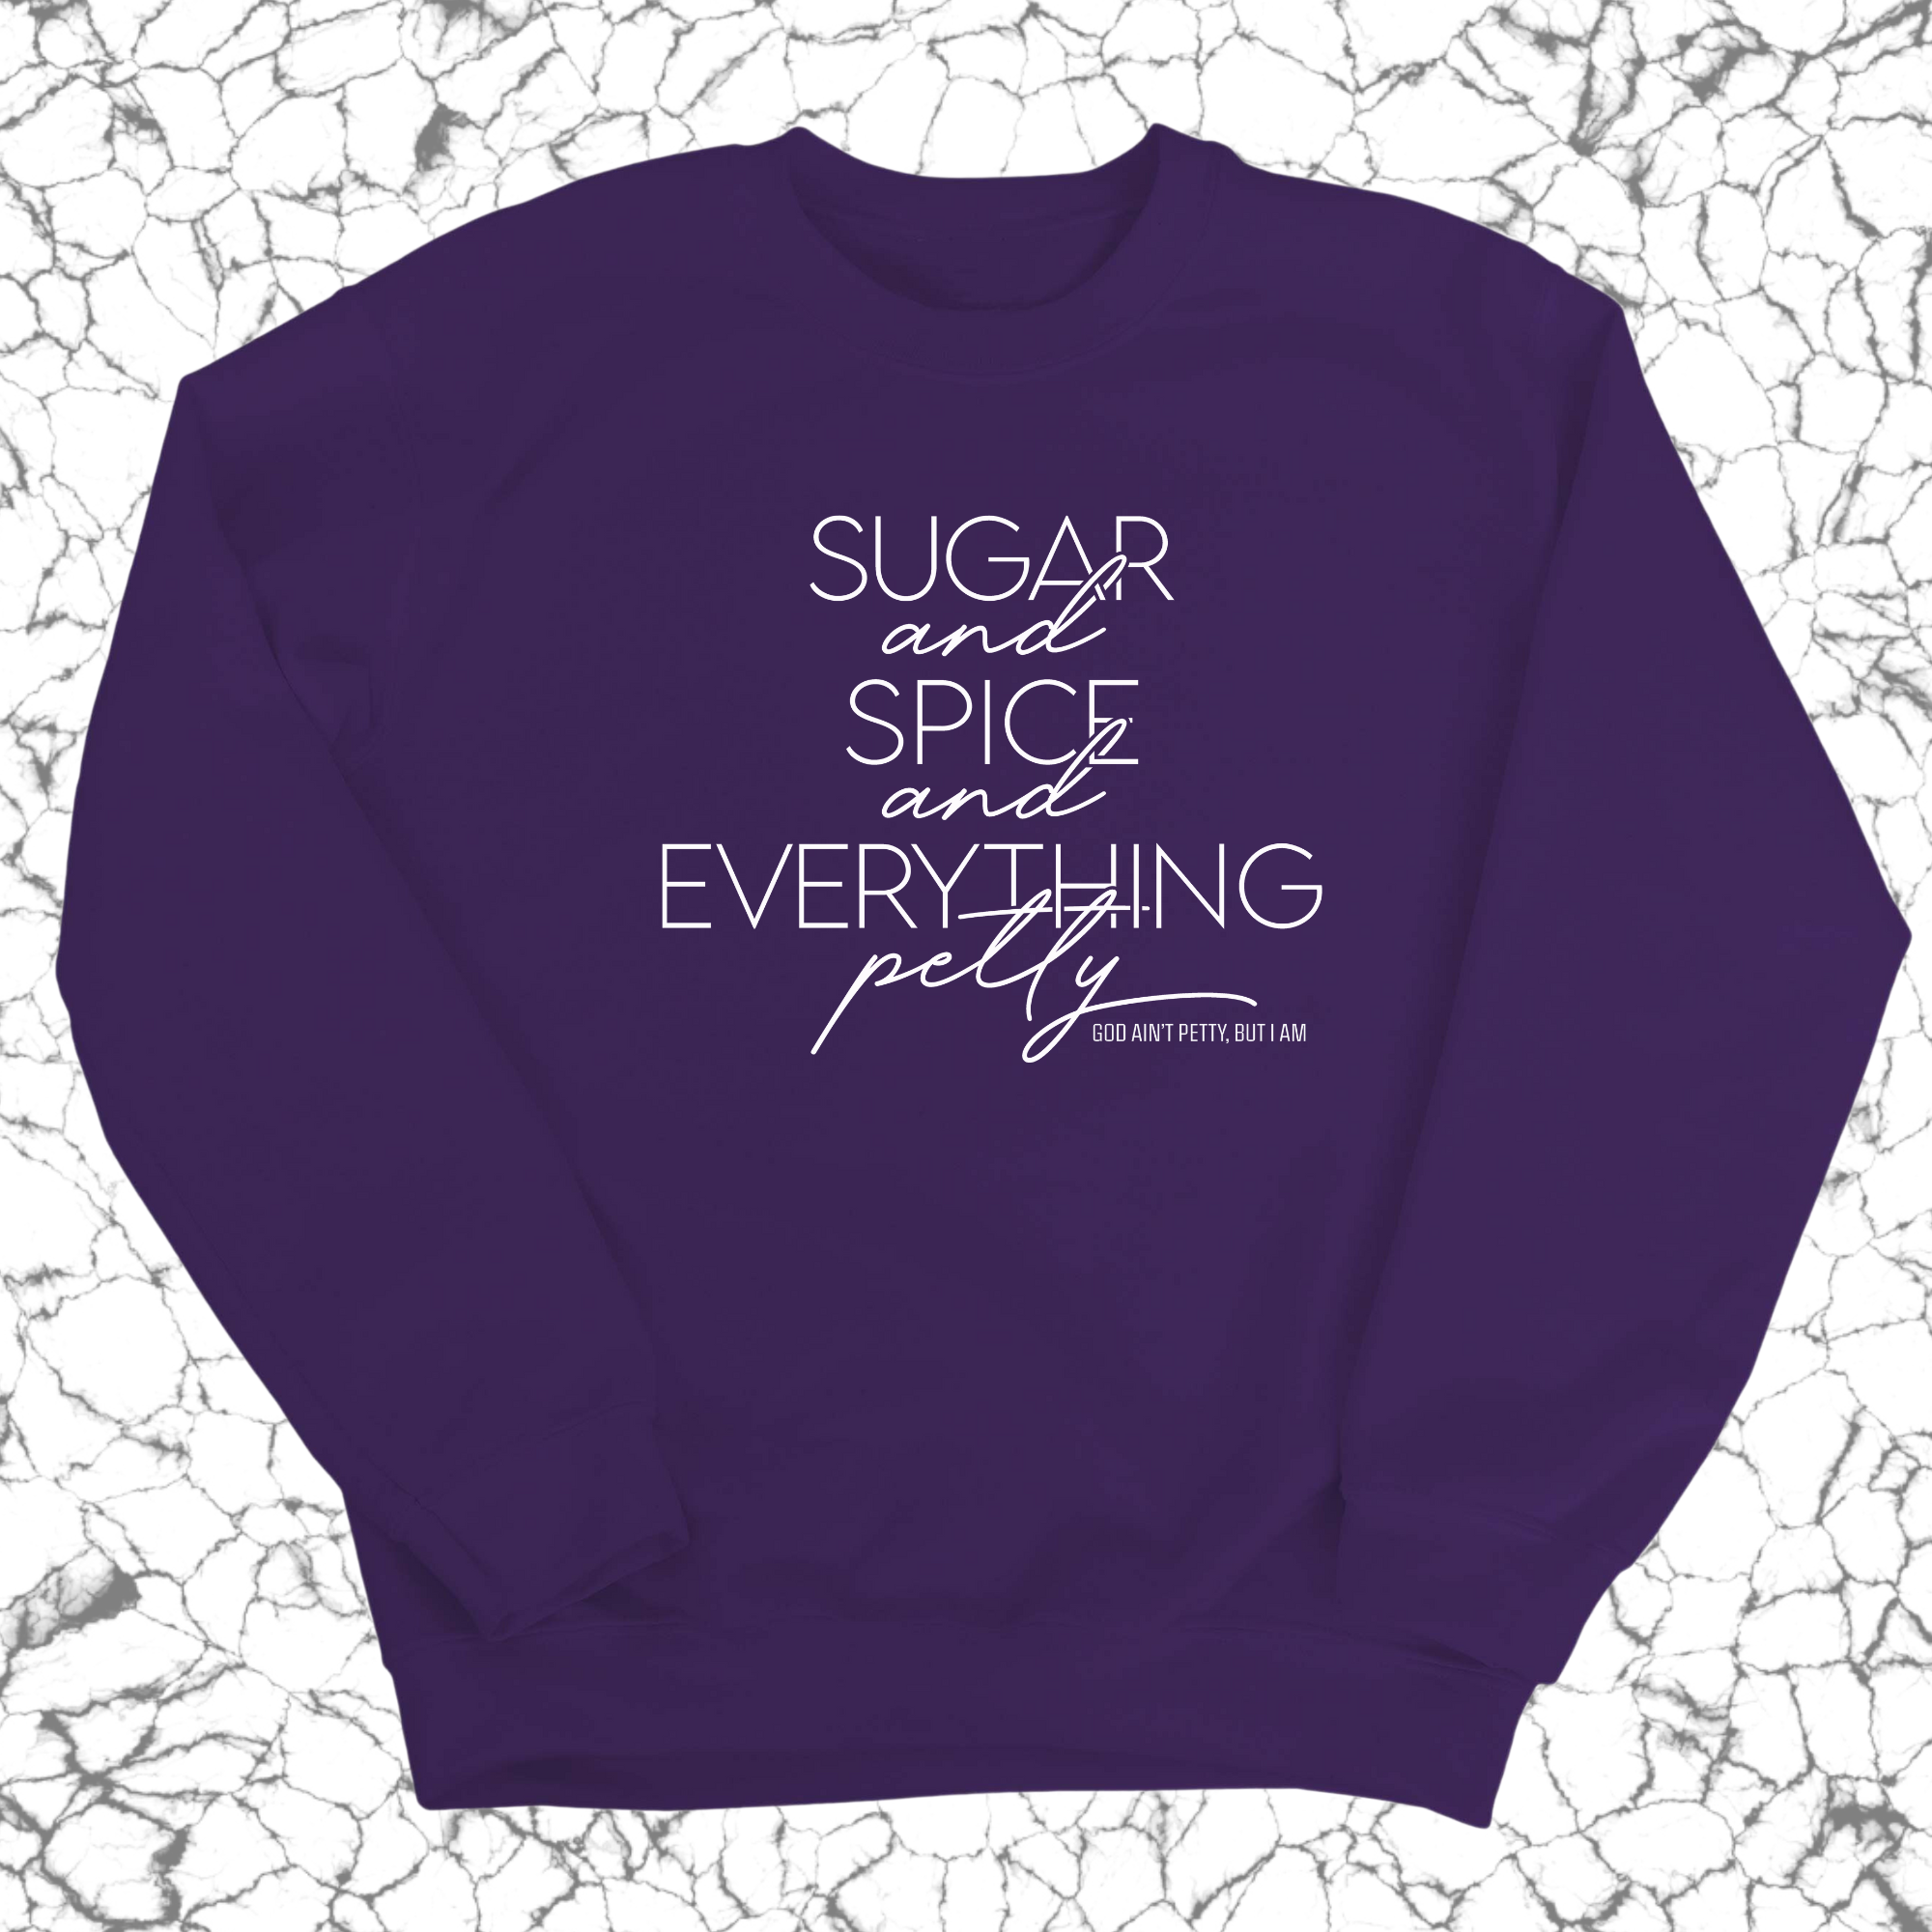 Sugar and Spice and Everything petty Unisex Sweatshirt-Sweatshirt-The Original God Ain't Petty But I Am